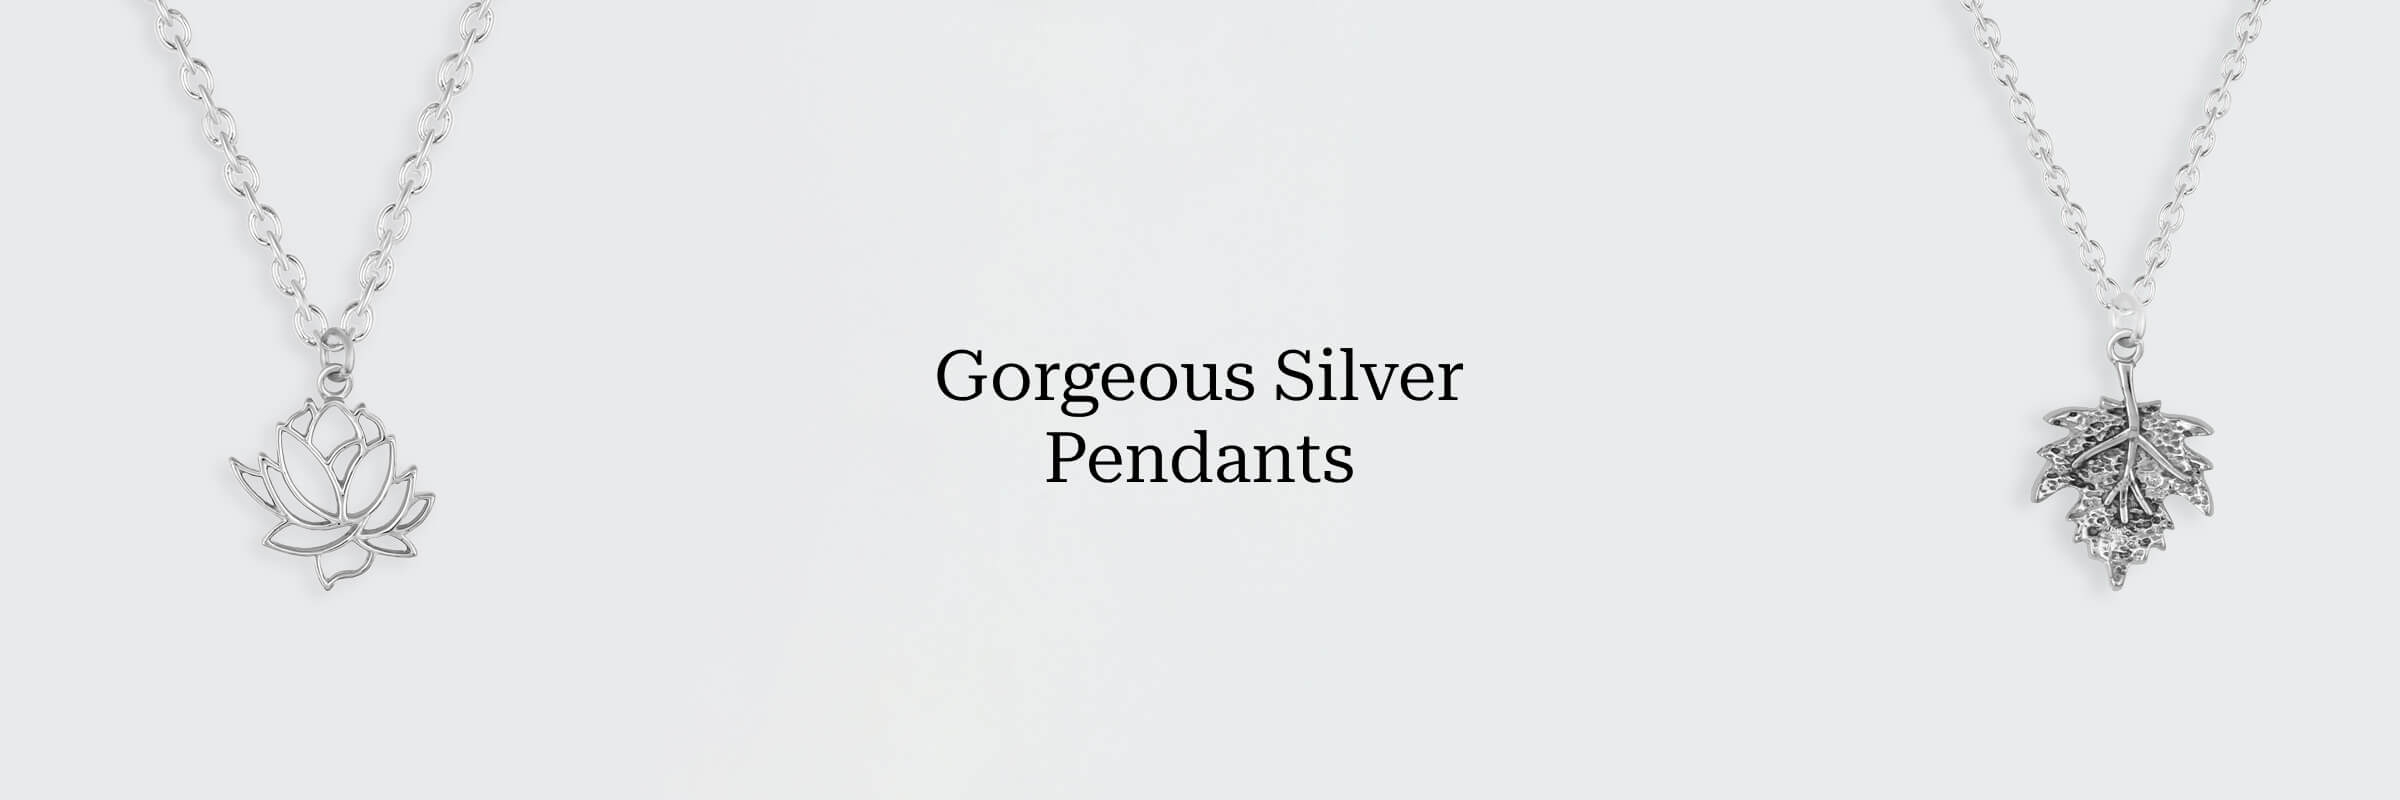 Plain Silver Pendant